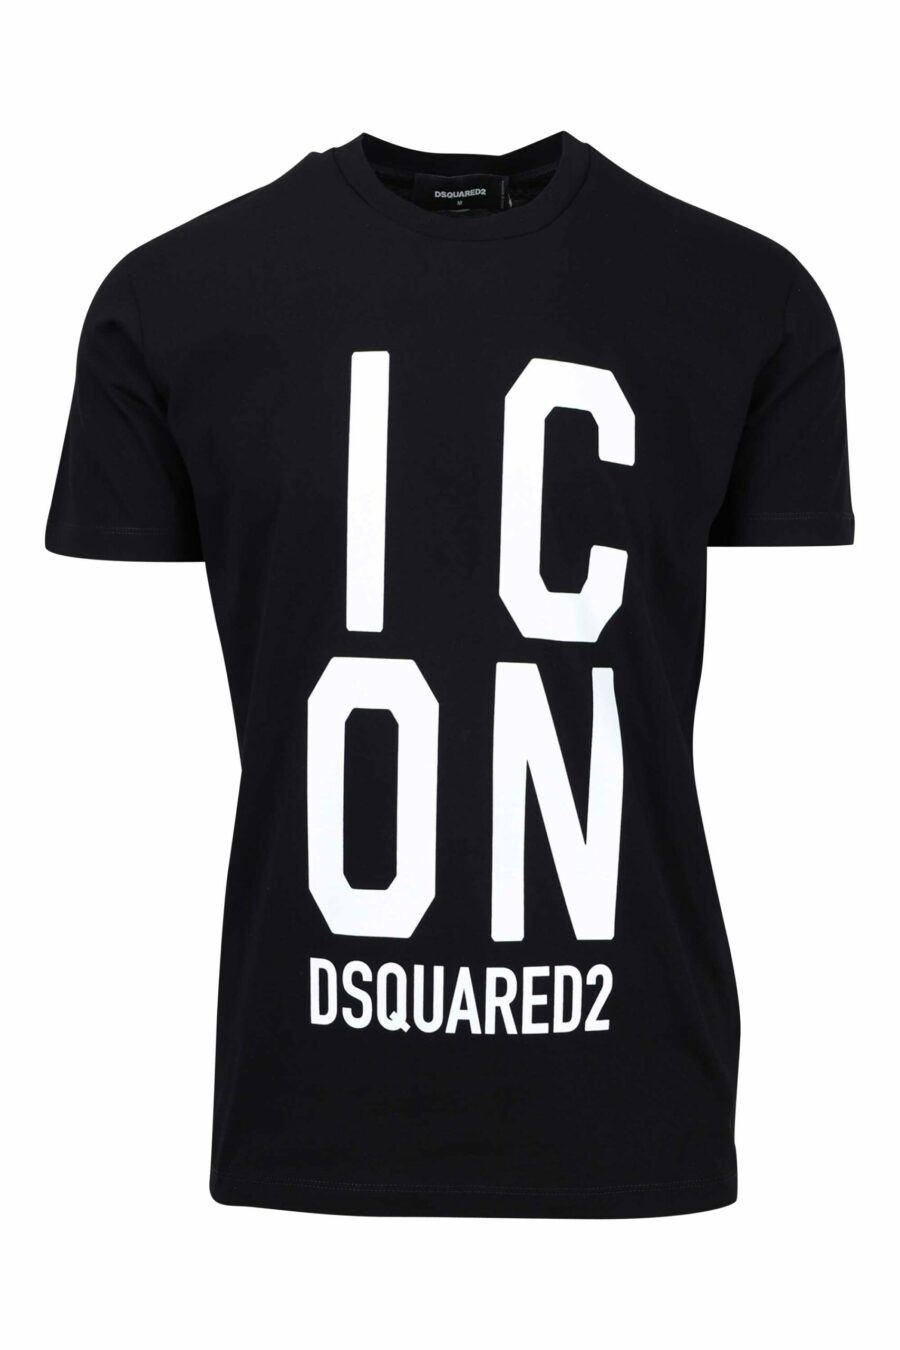 T-shirt noir avec maxilogo "icon" carré - 8052134981047 scaled